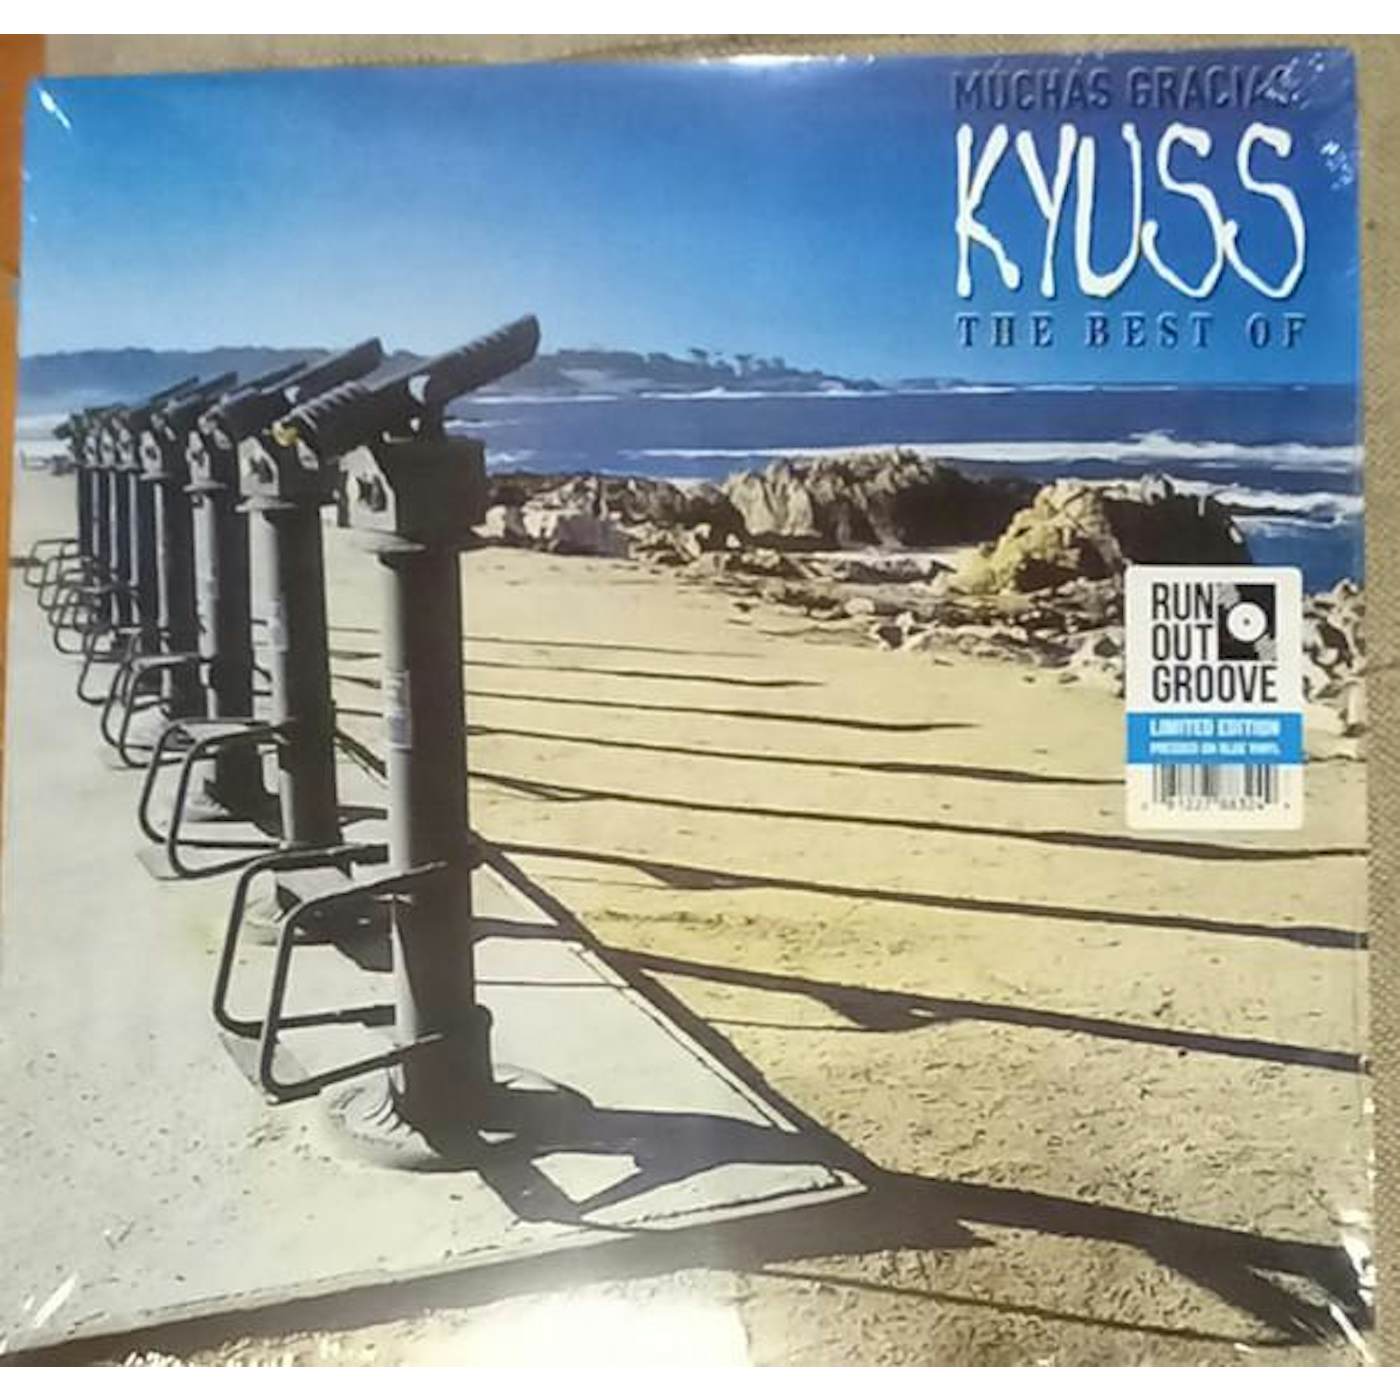 Muchas Gracias: The Best Of Kyuss Vinyl Record